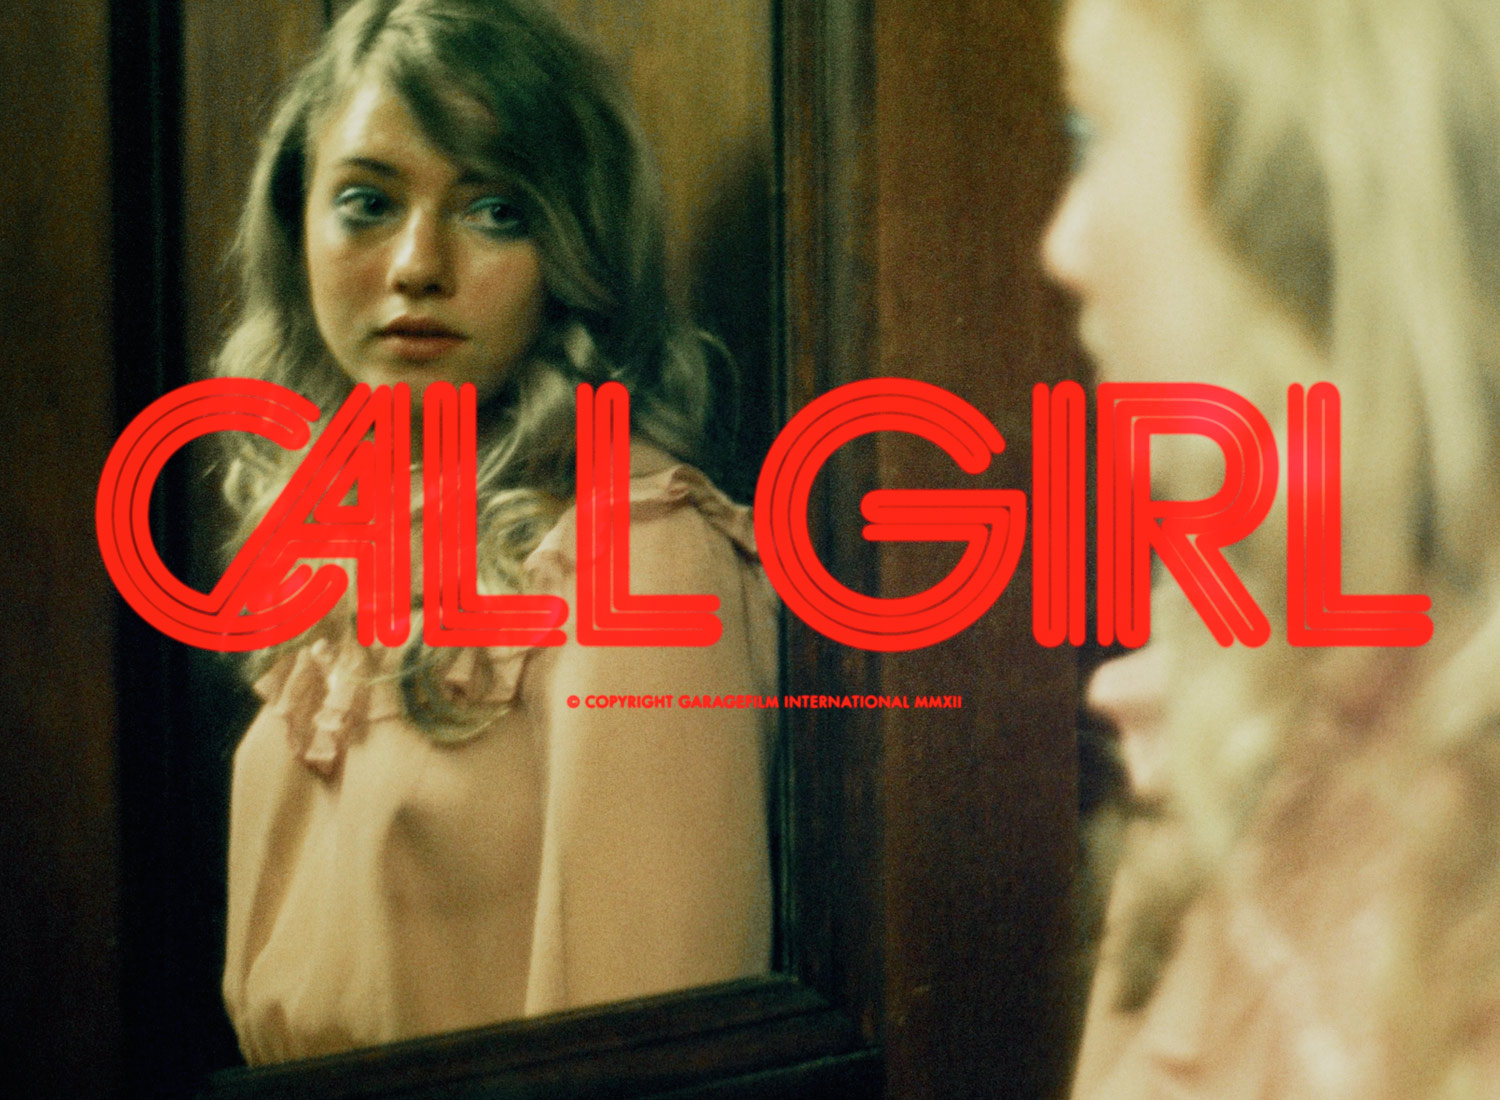 Girl cll Call Girl